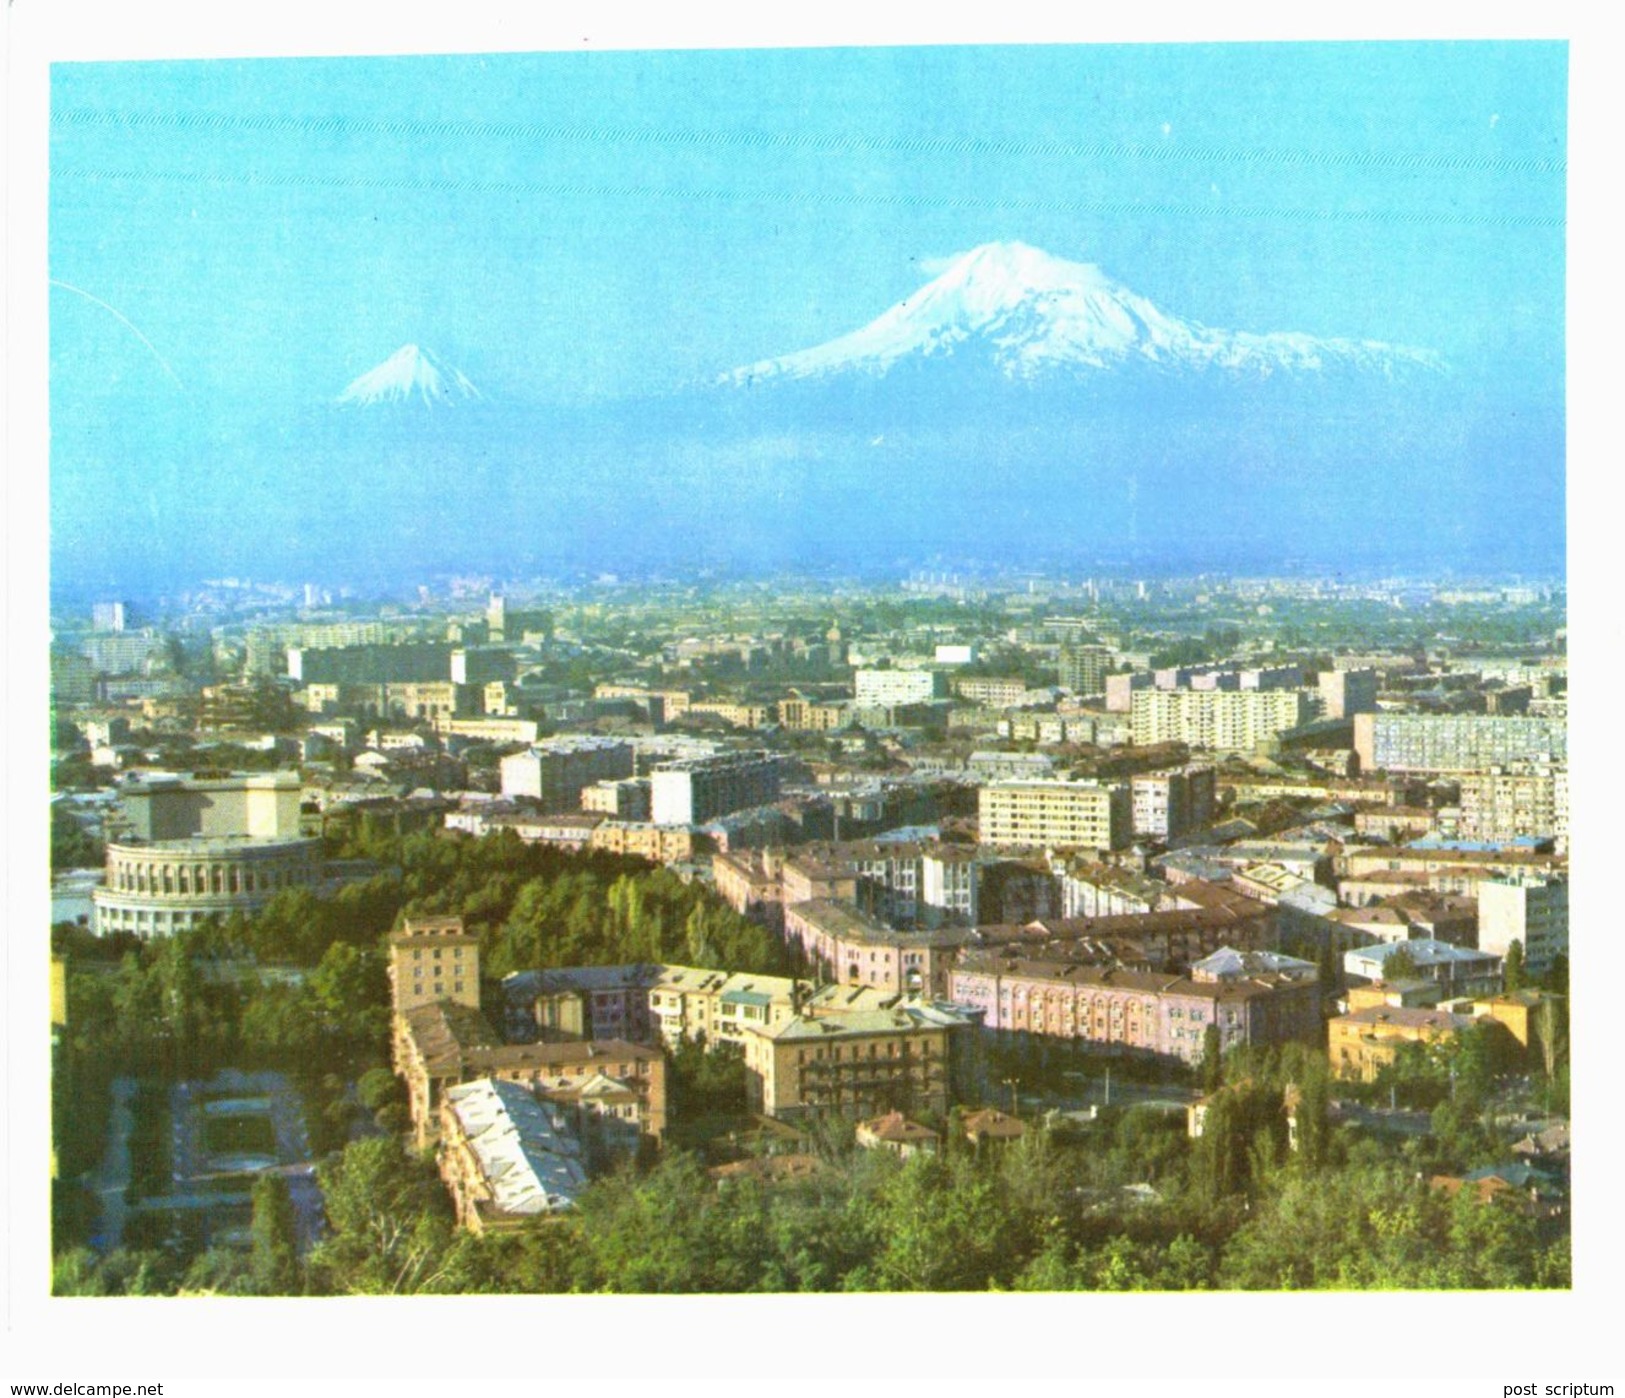 Asie - Arménie - Erevan - Yerevan -   lot de 8 cartes grand format